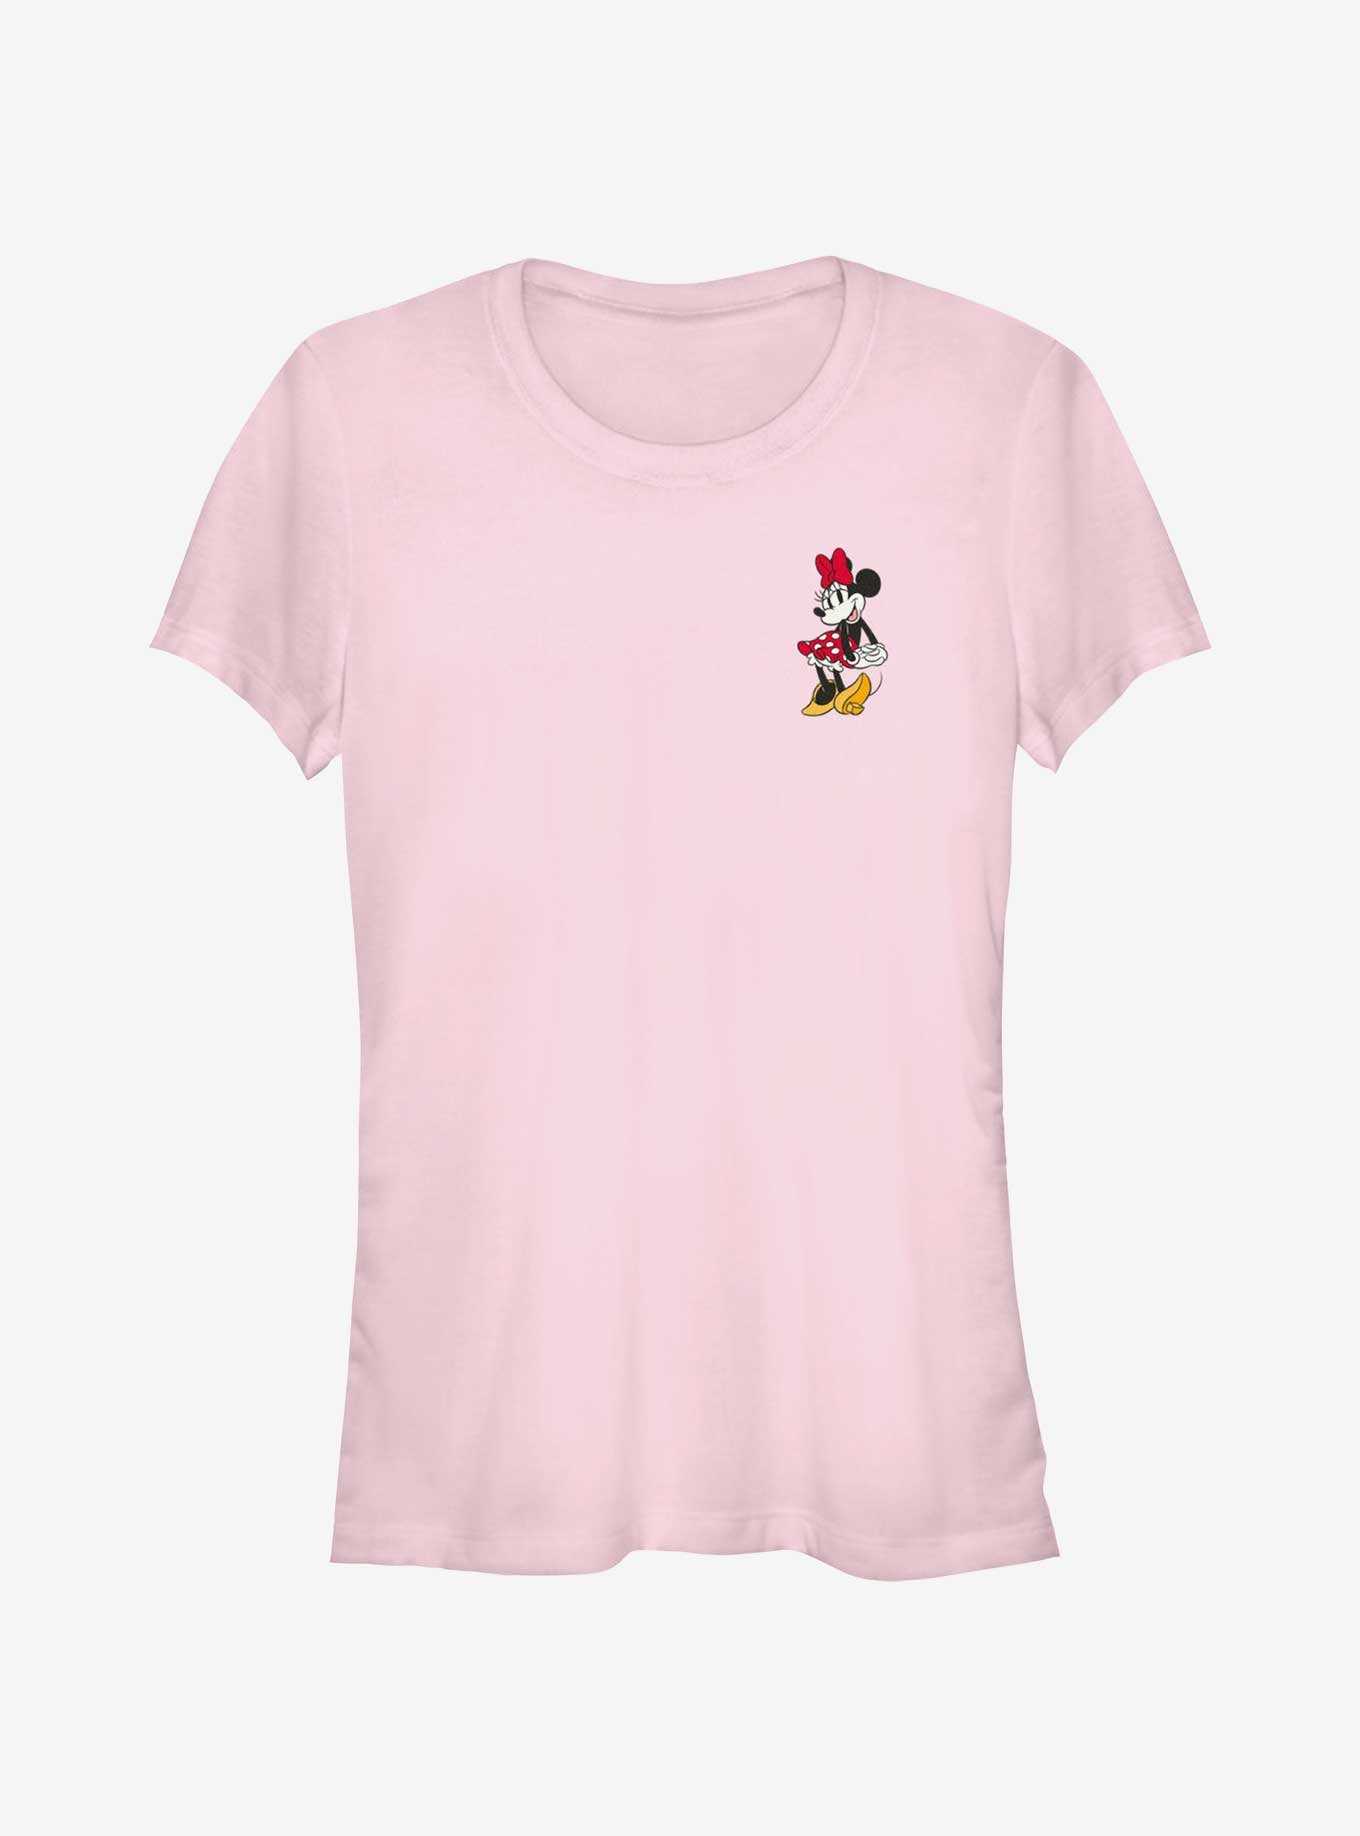 Disney Minnie Mouse Charming Minnie Pocket Girls T-Shirt, , hi-res